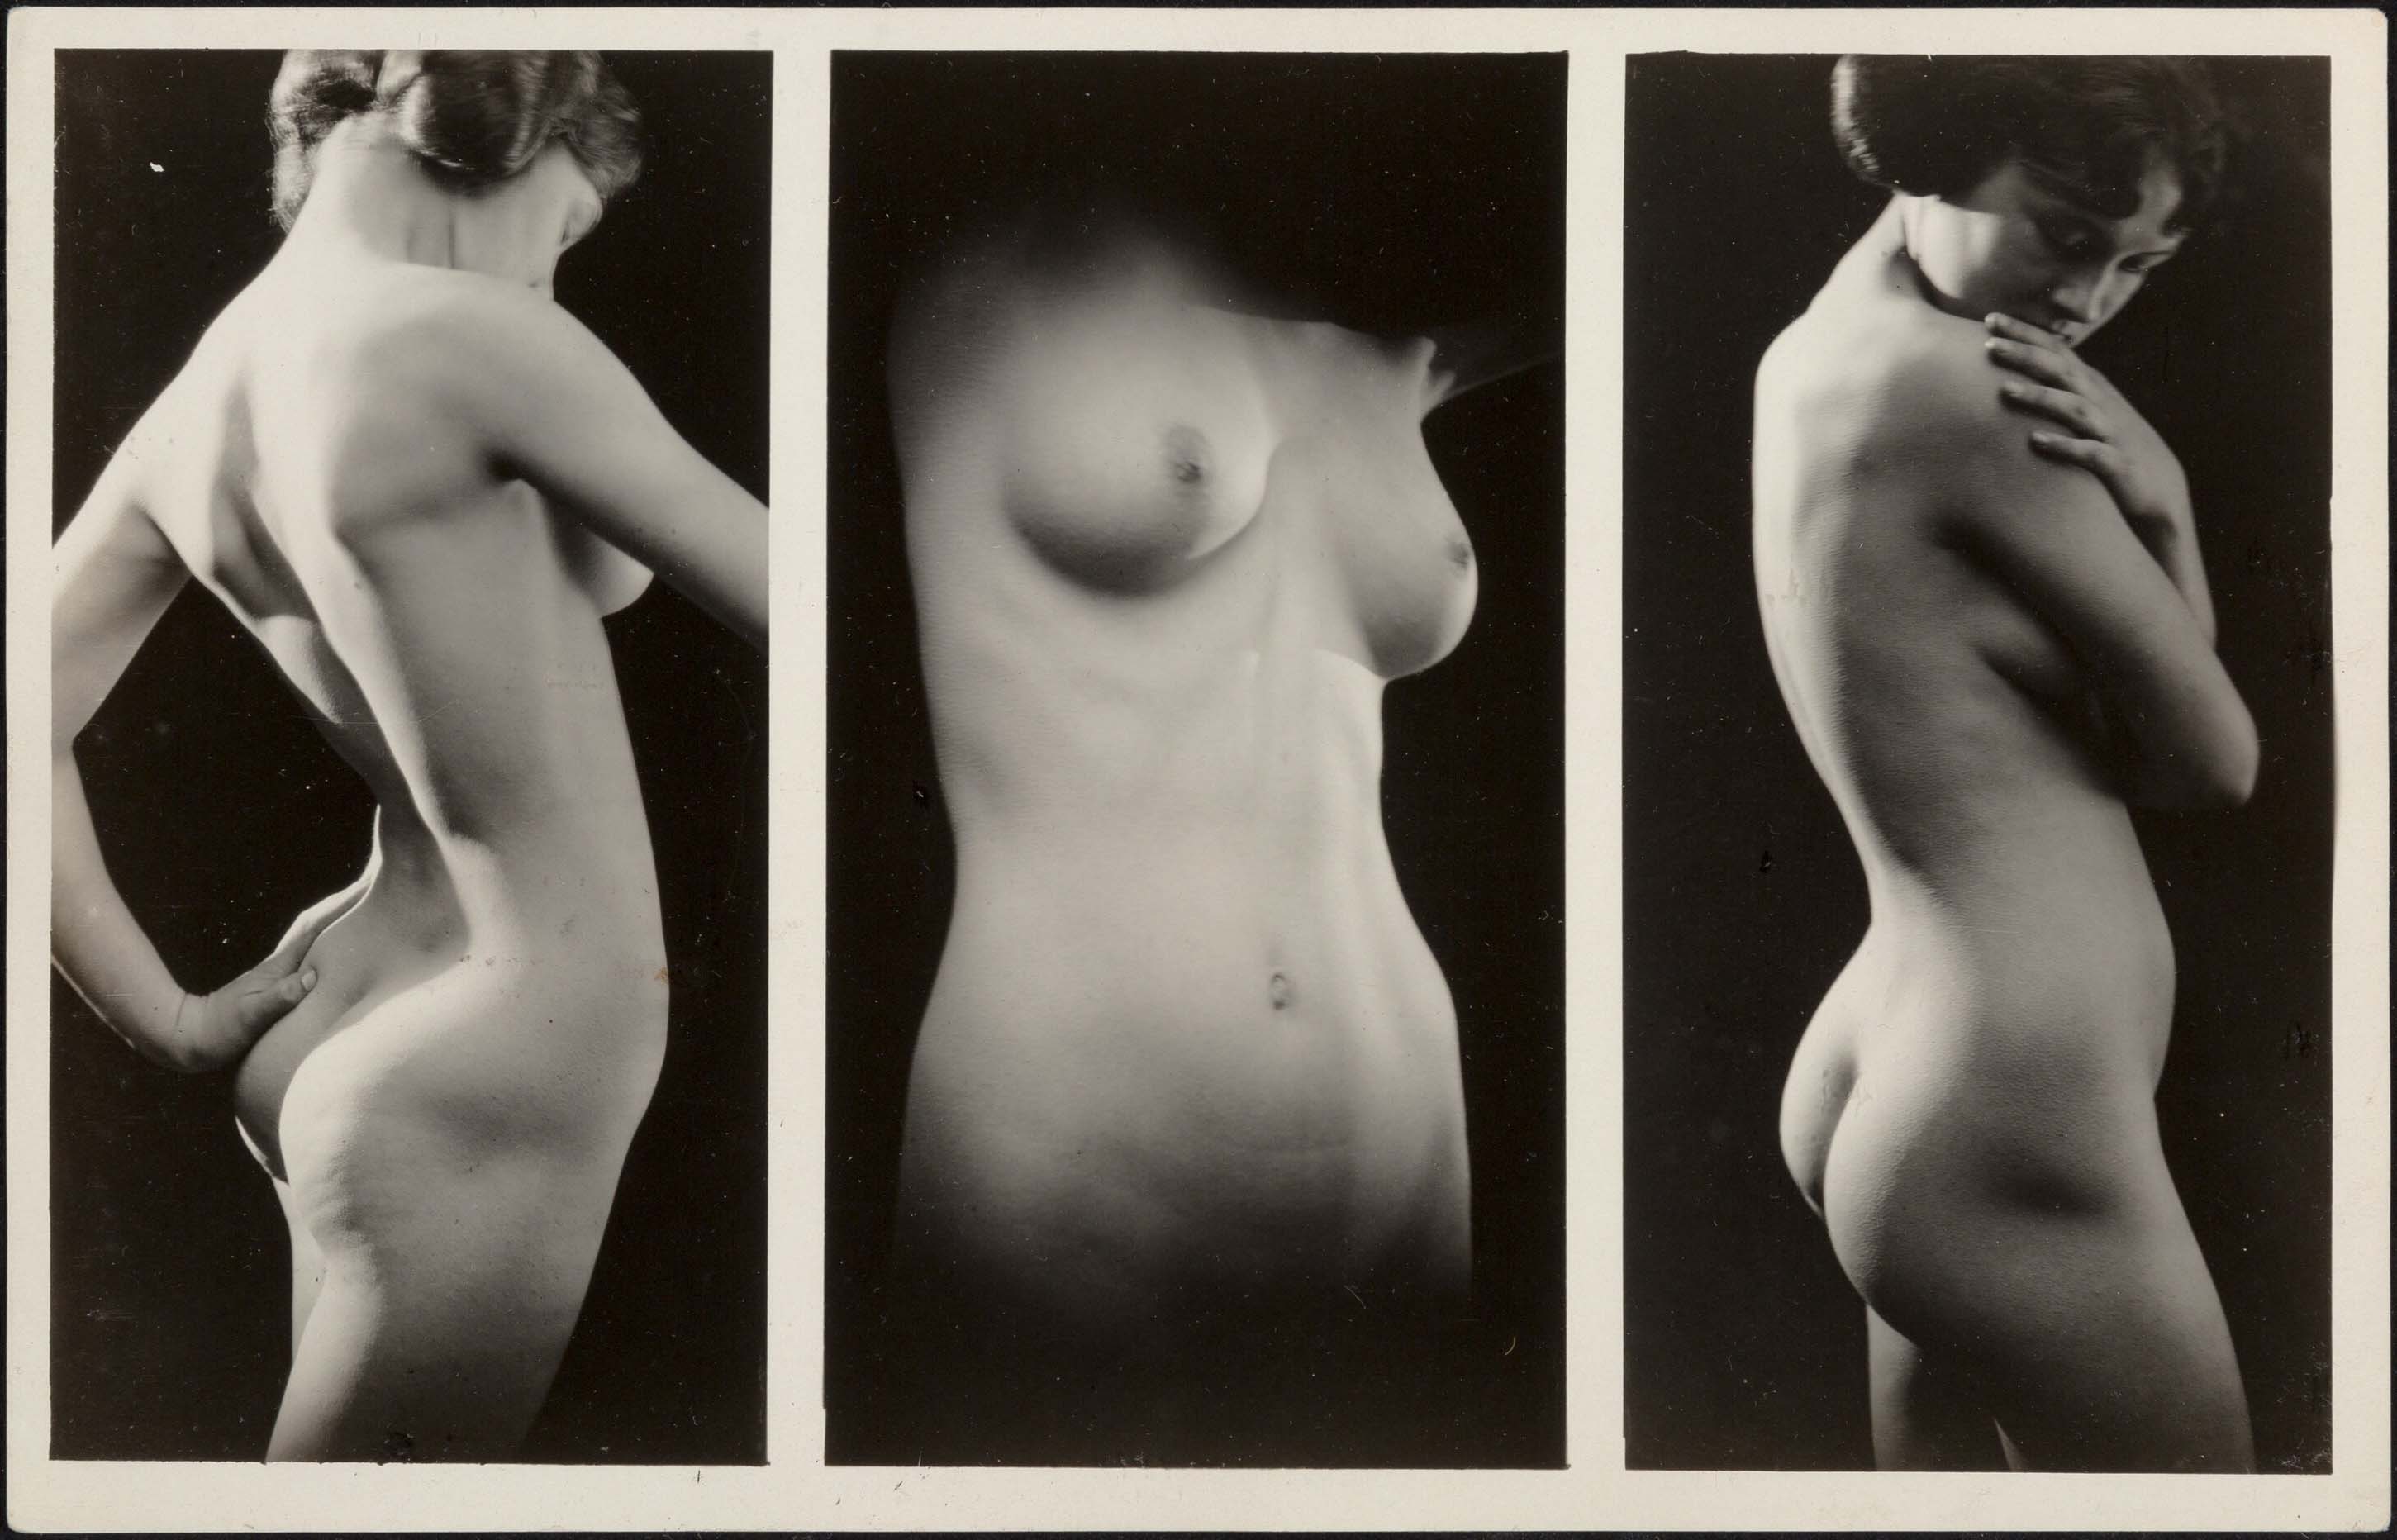 Albert Arthur Allen (American, 1886-1962) :: The Female Figure, Series 1 (Plate No. 8), 1923. | src Heritage Auctions